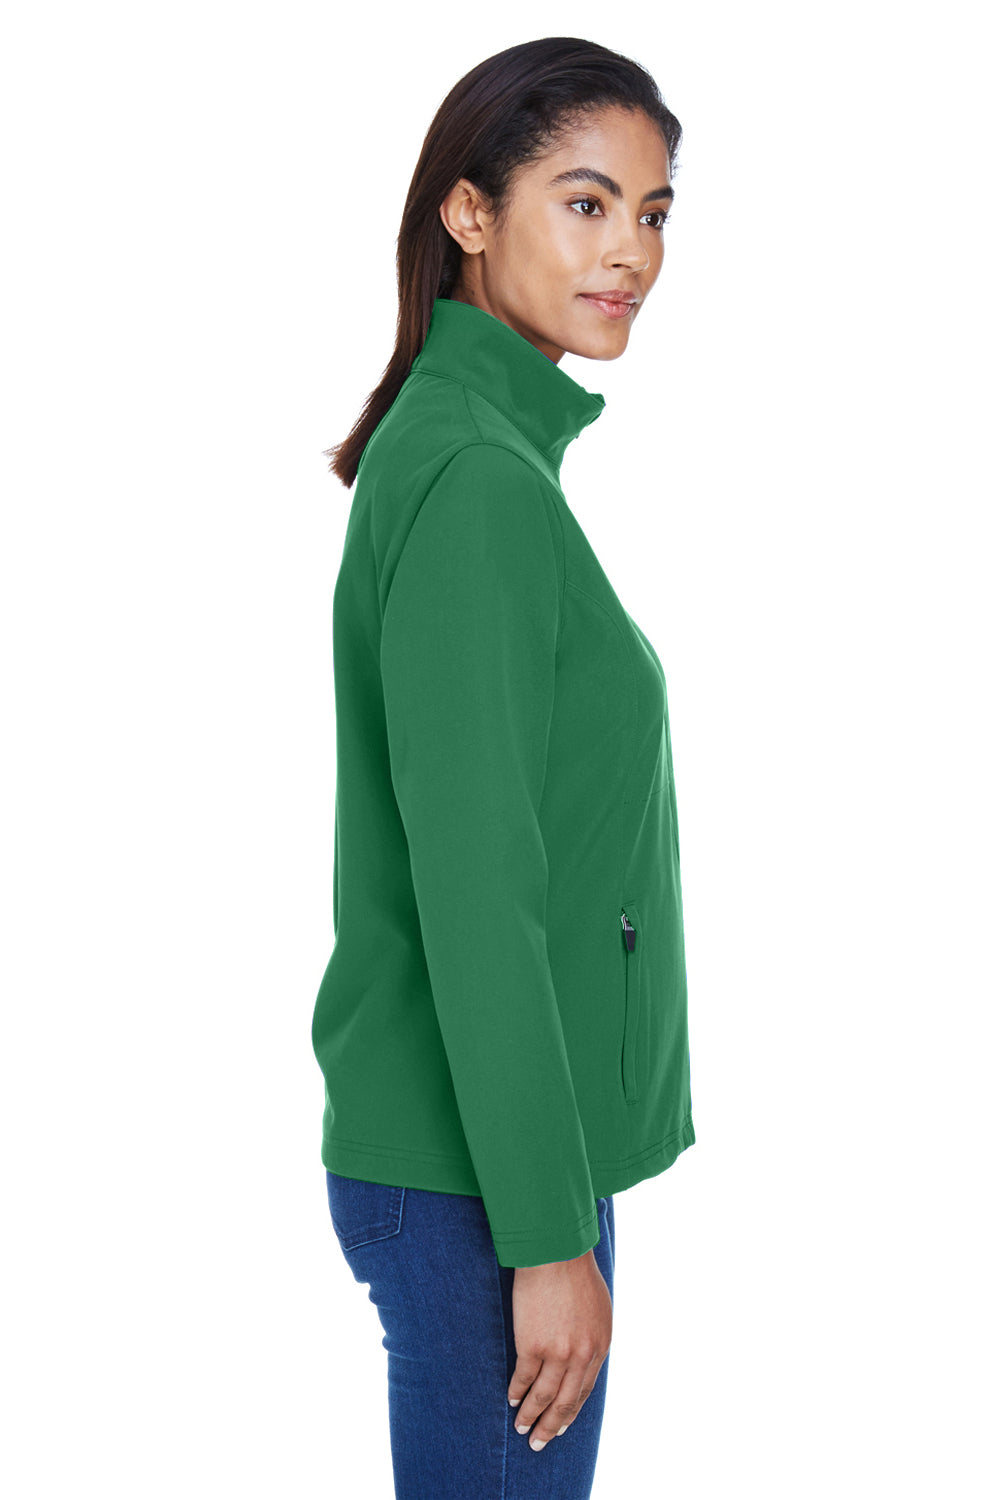 Team 365 TT80W Womens Leader Waterproof Full Zip Jacket Dark Green Side